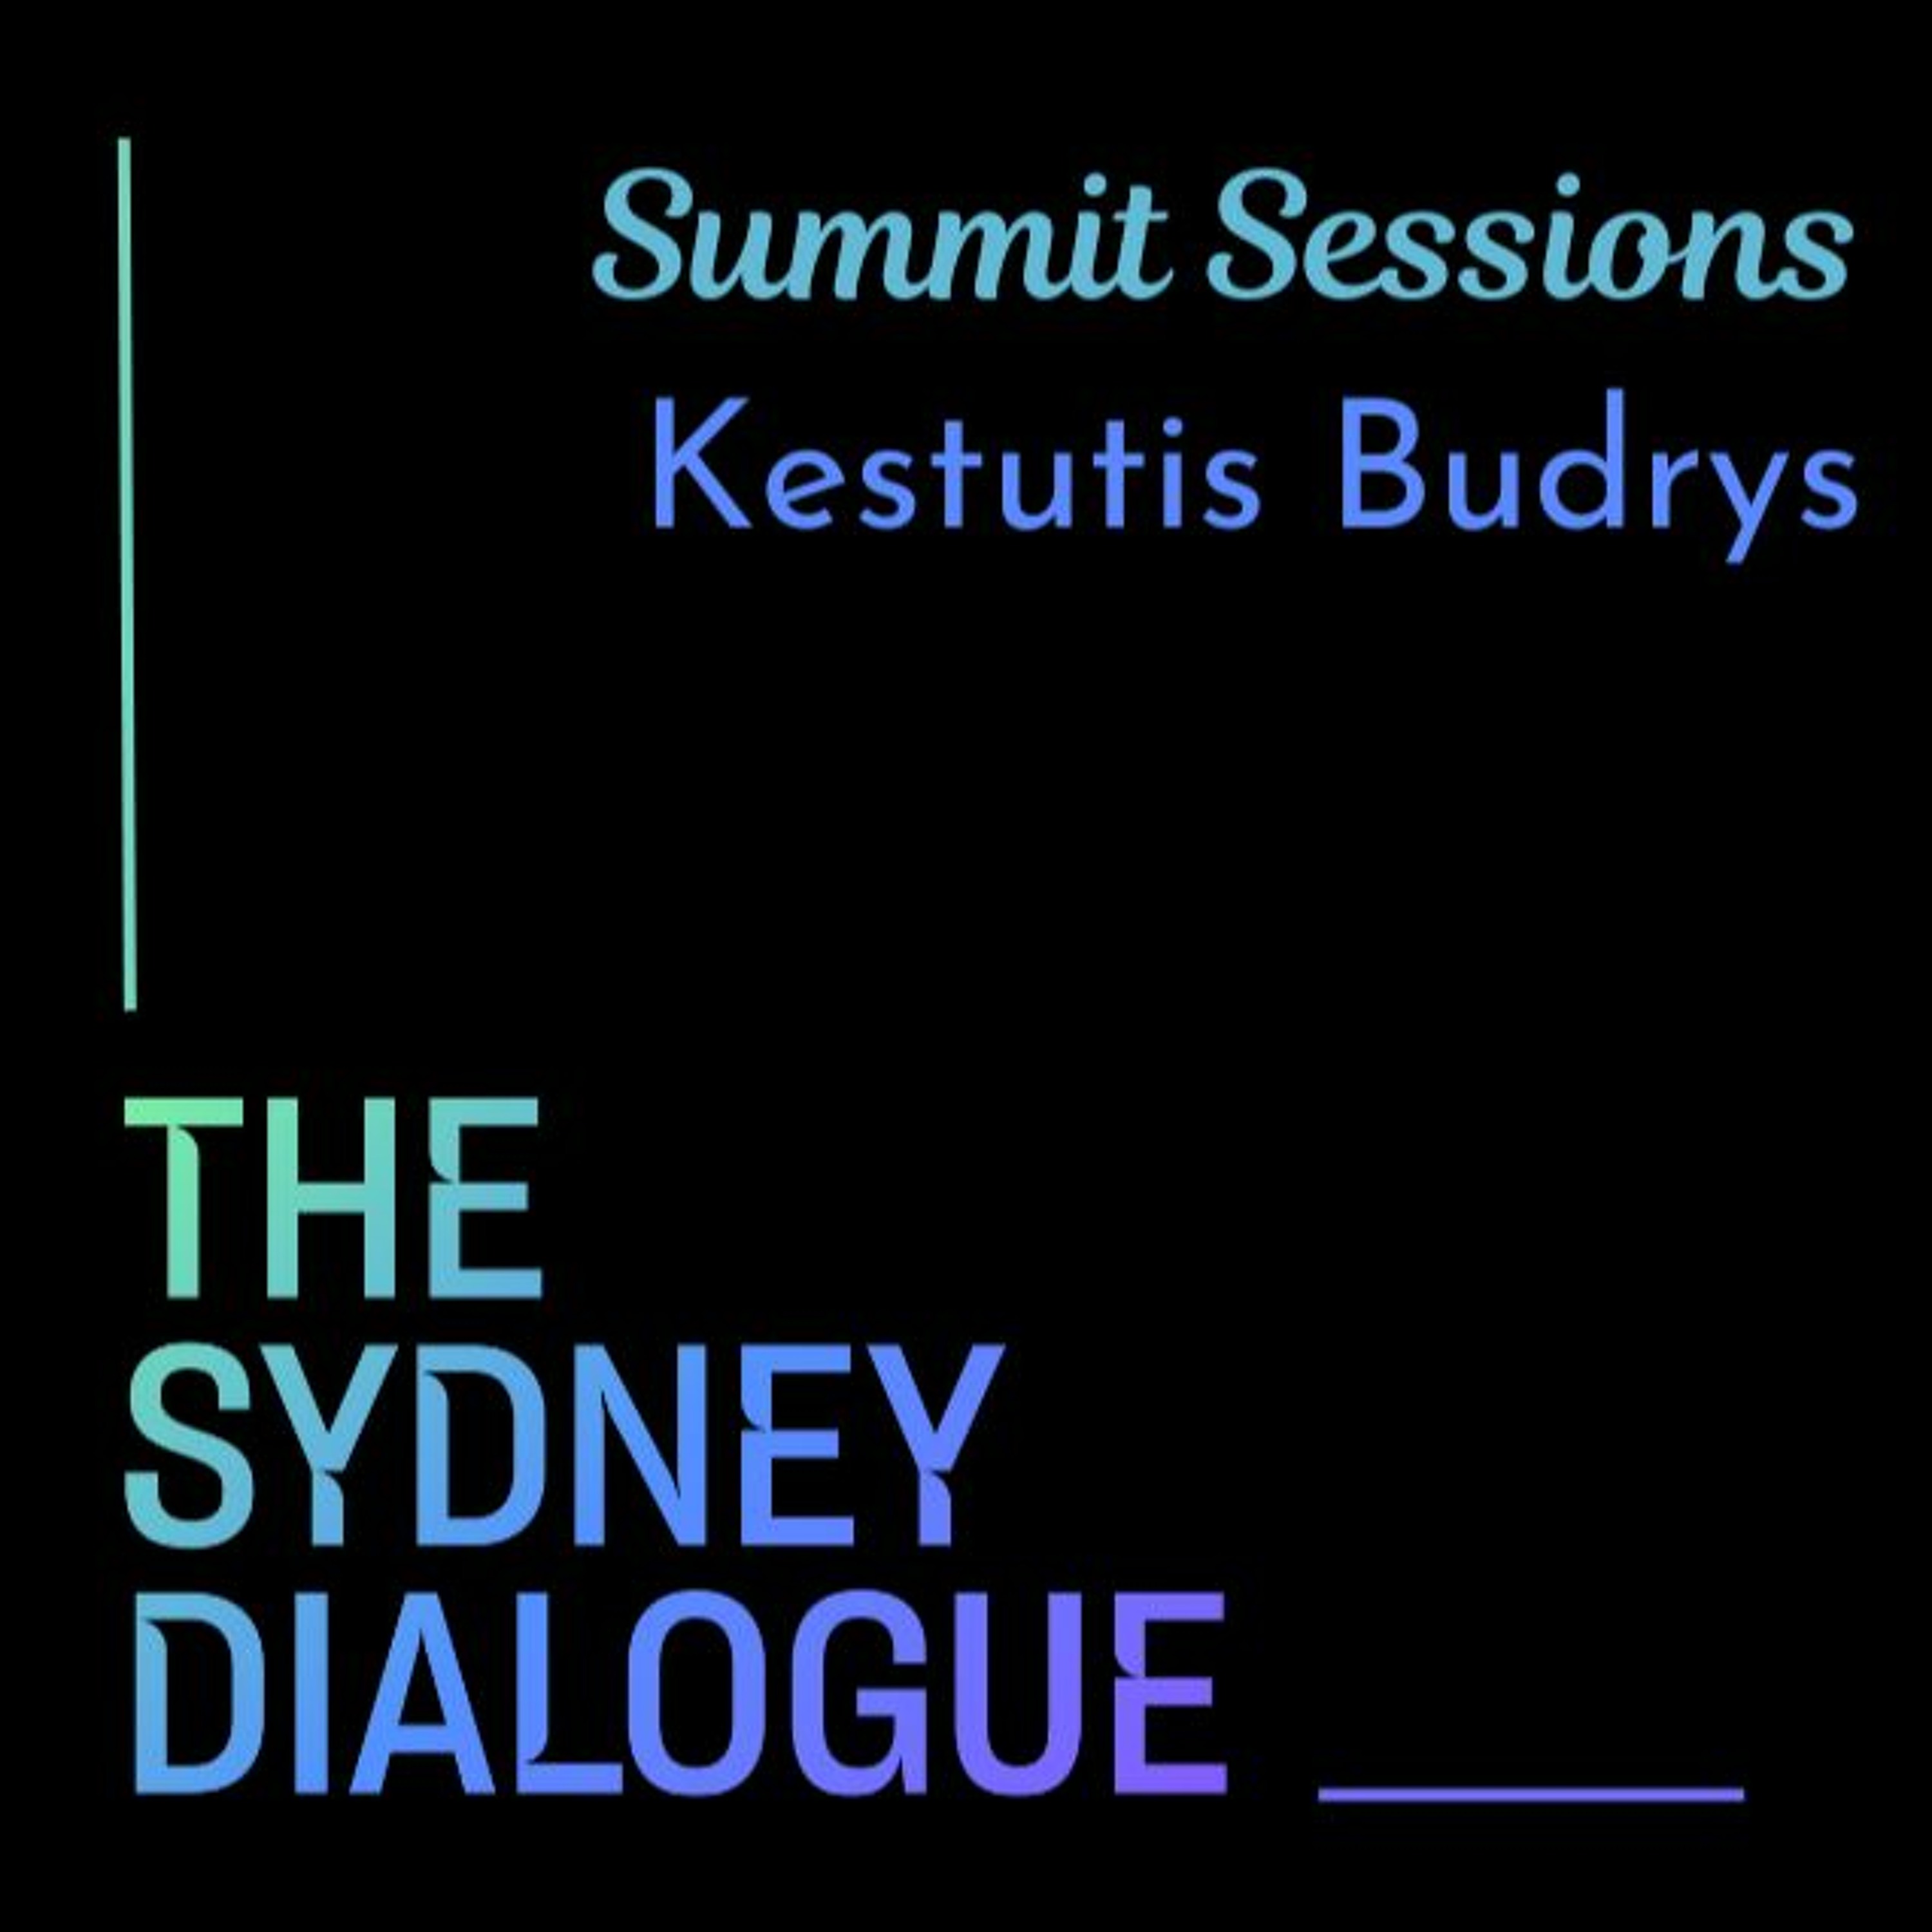 The Sydney Dialogue Summit Sessions: Kestutis Budrys